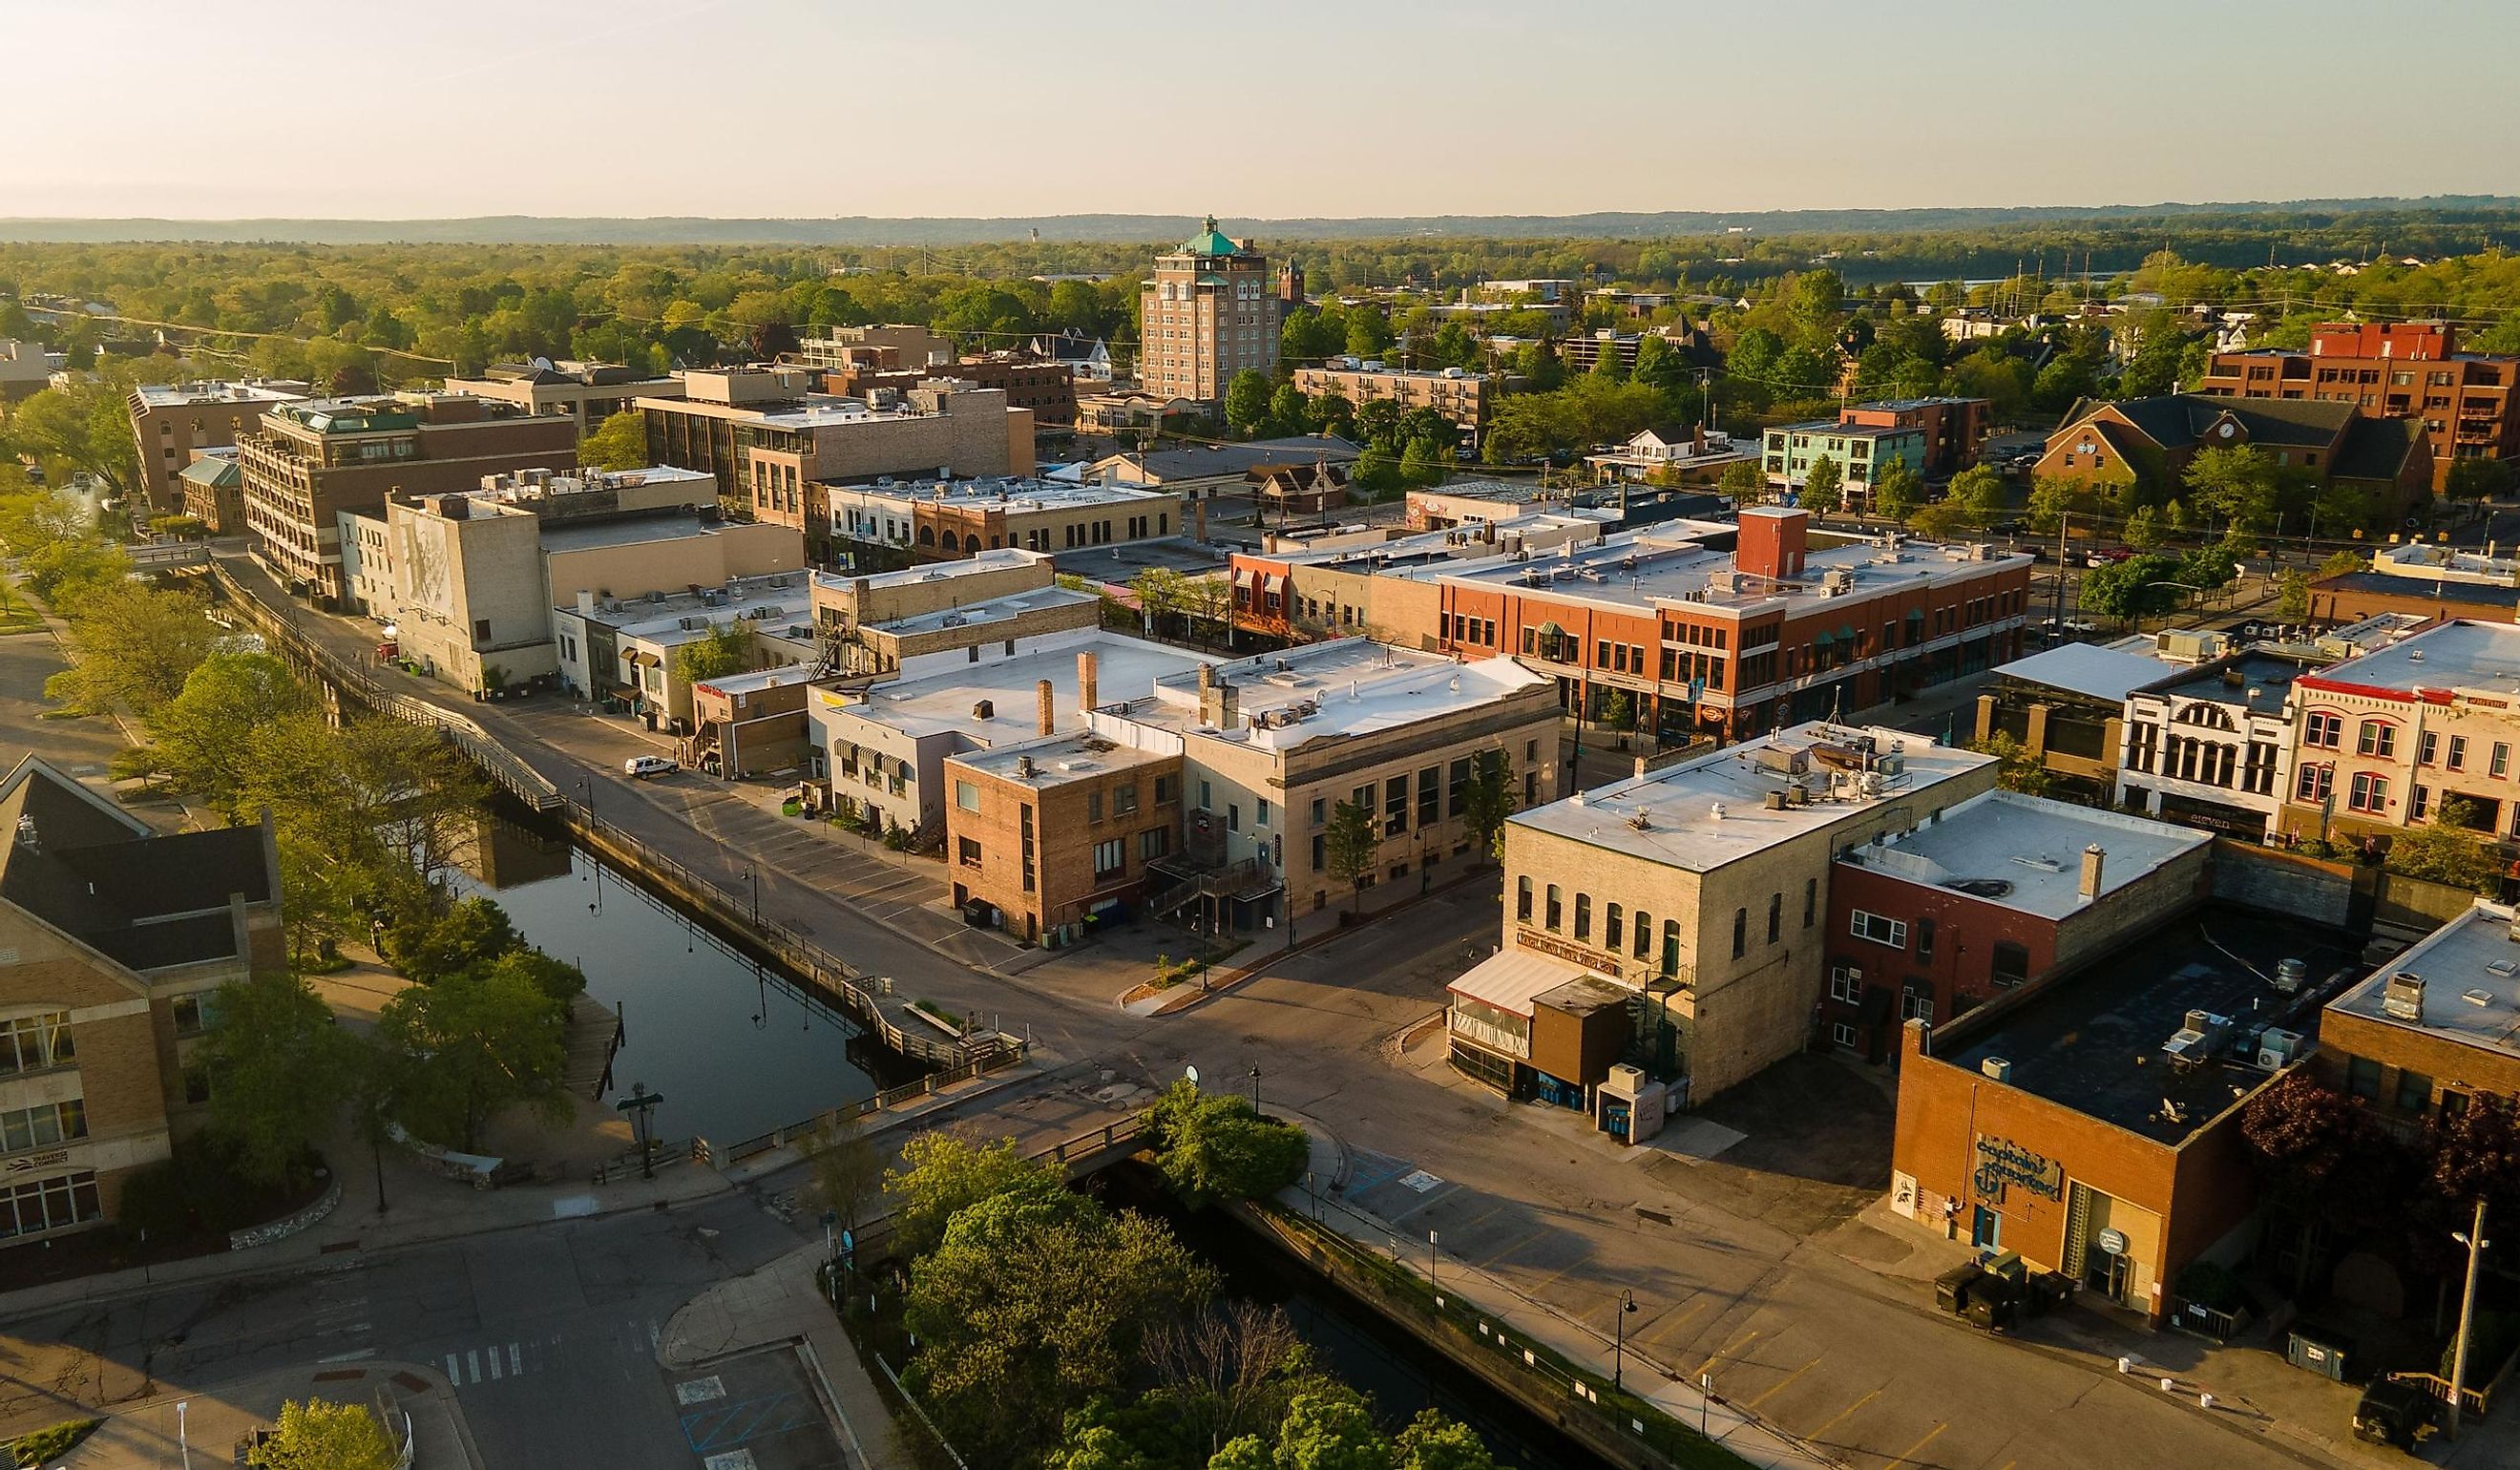 Traverse City, Michigan USA. Editorial credit: Matthew G Eddy / Shutterstock.com